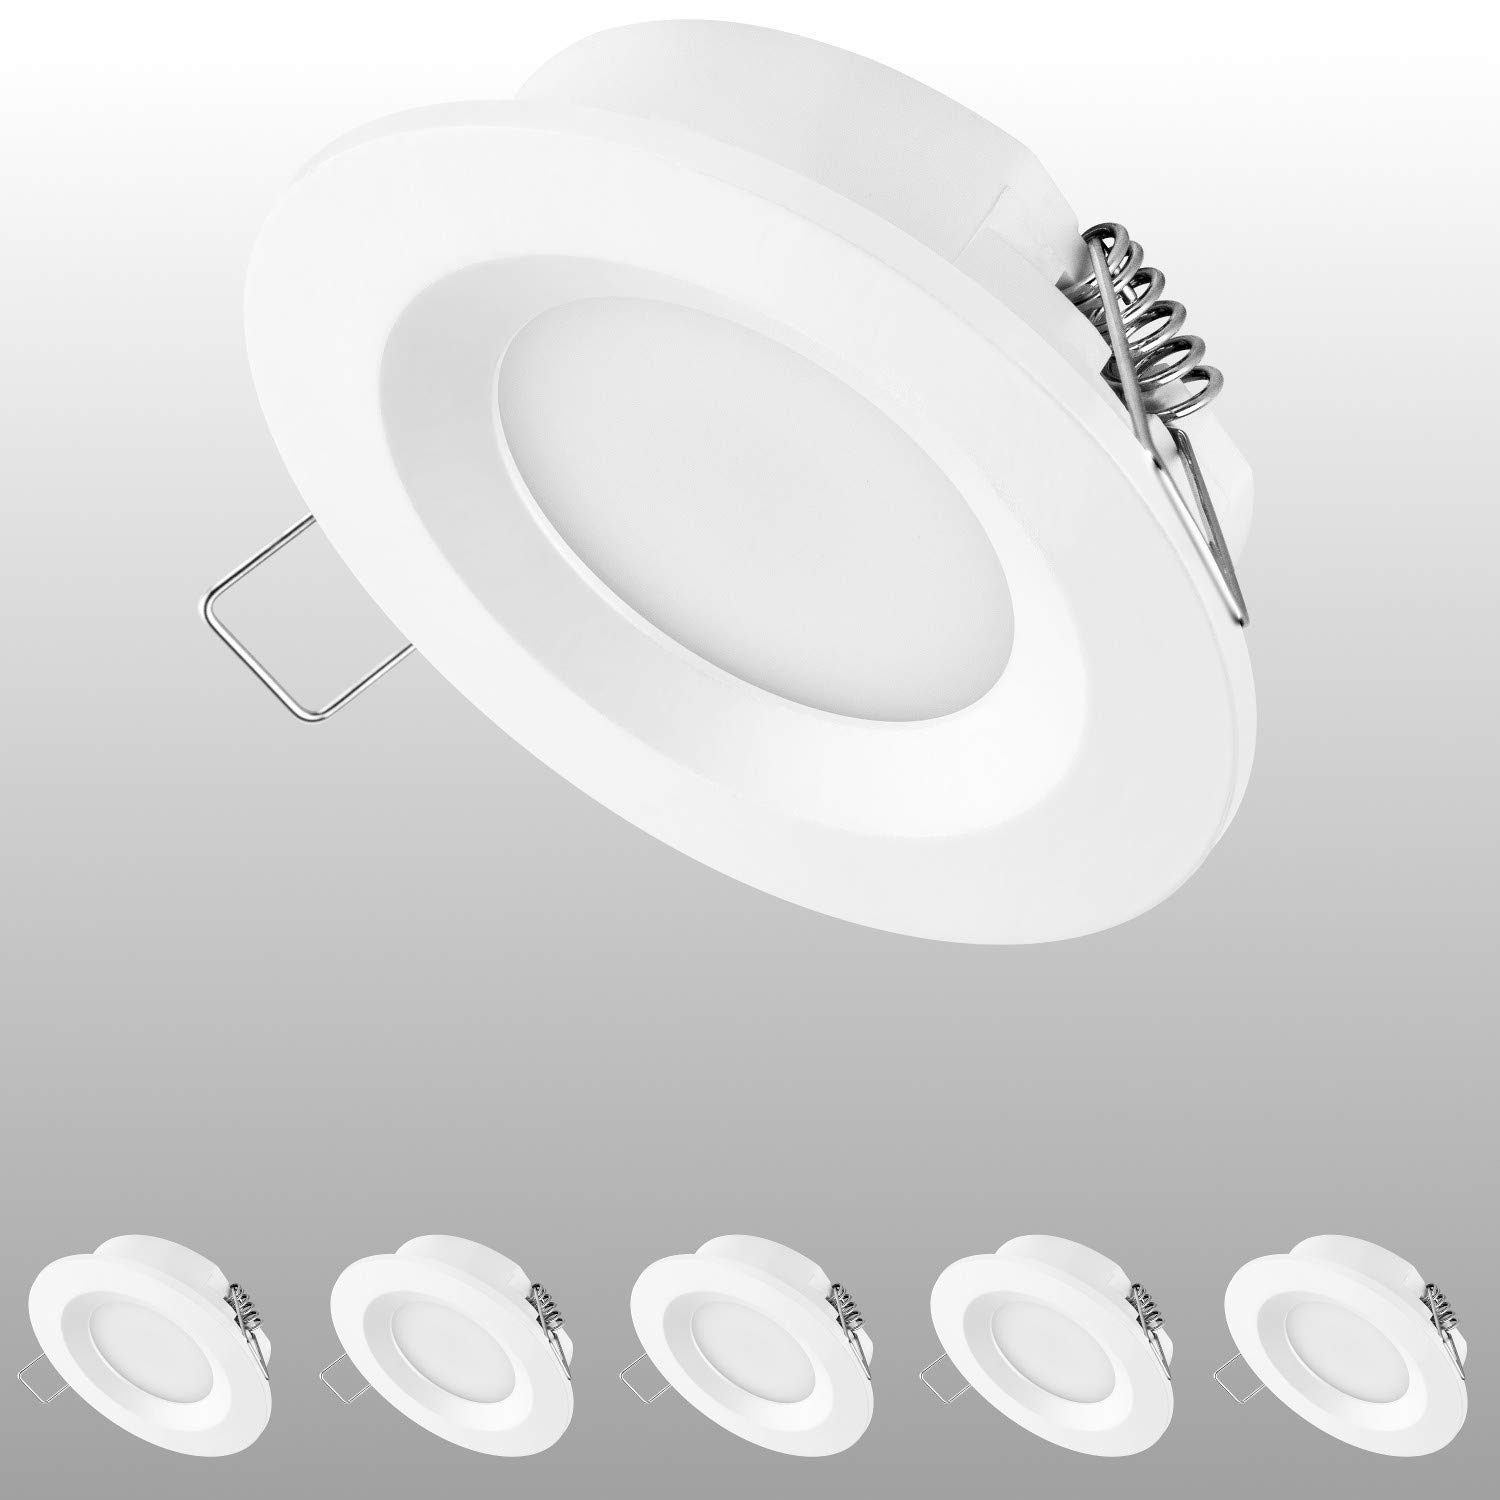 TEVEA Ultra Flach LED Einbaustrahler | 3.5W 300lm 230V | Einbauleuchte | Einbauspot | 5er Pack (Warmweiss)